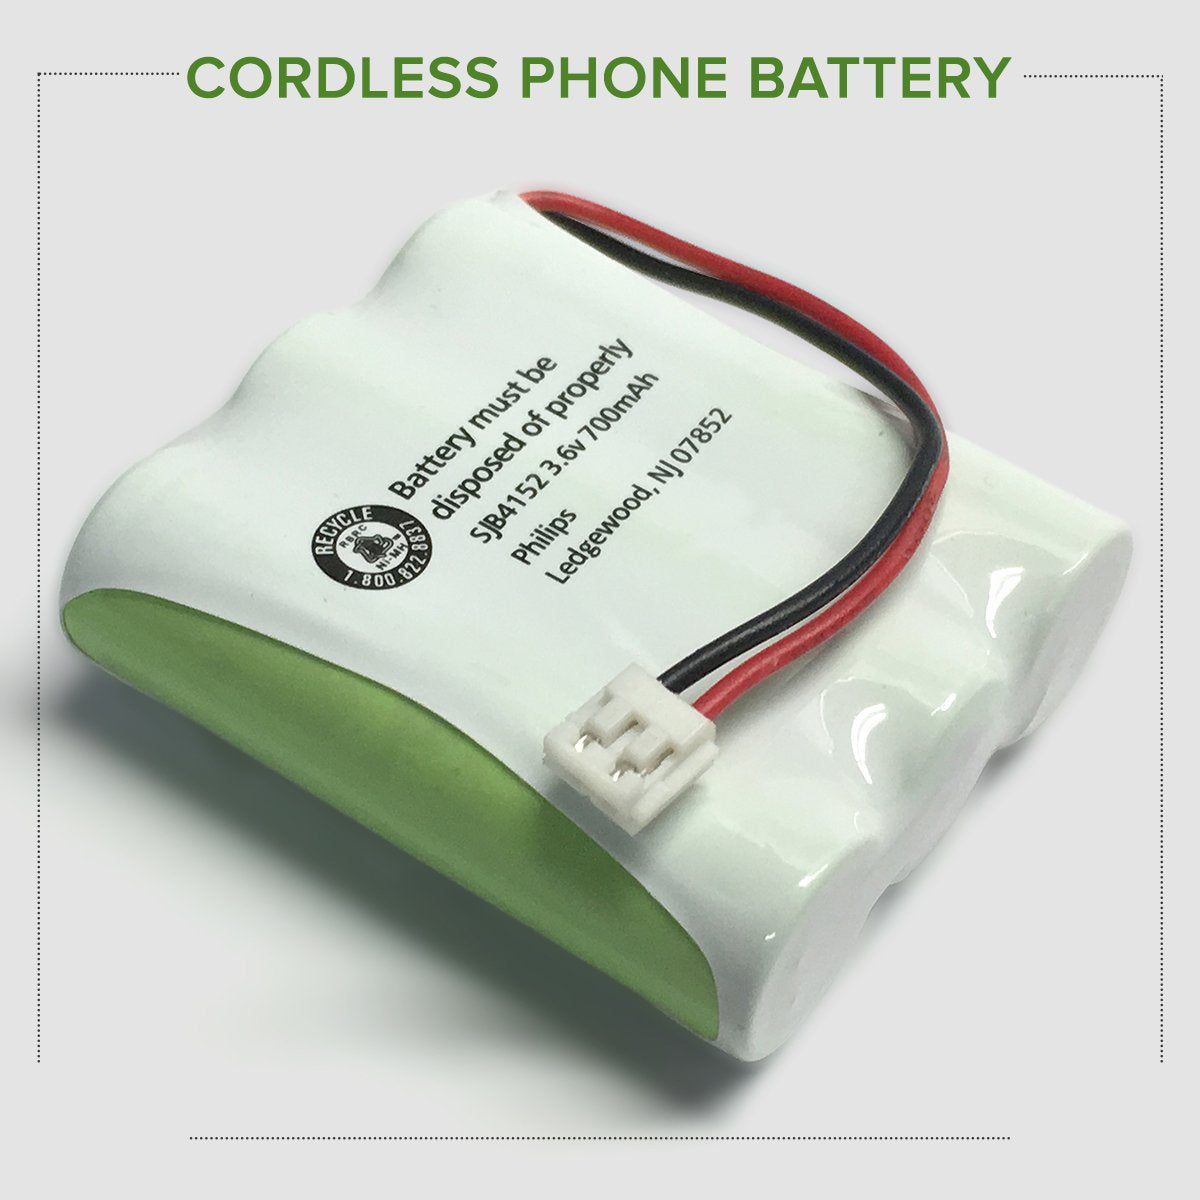 GE 29445 Cordless Phone Battery